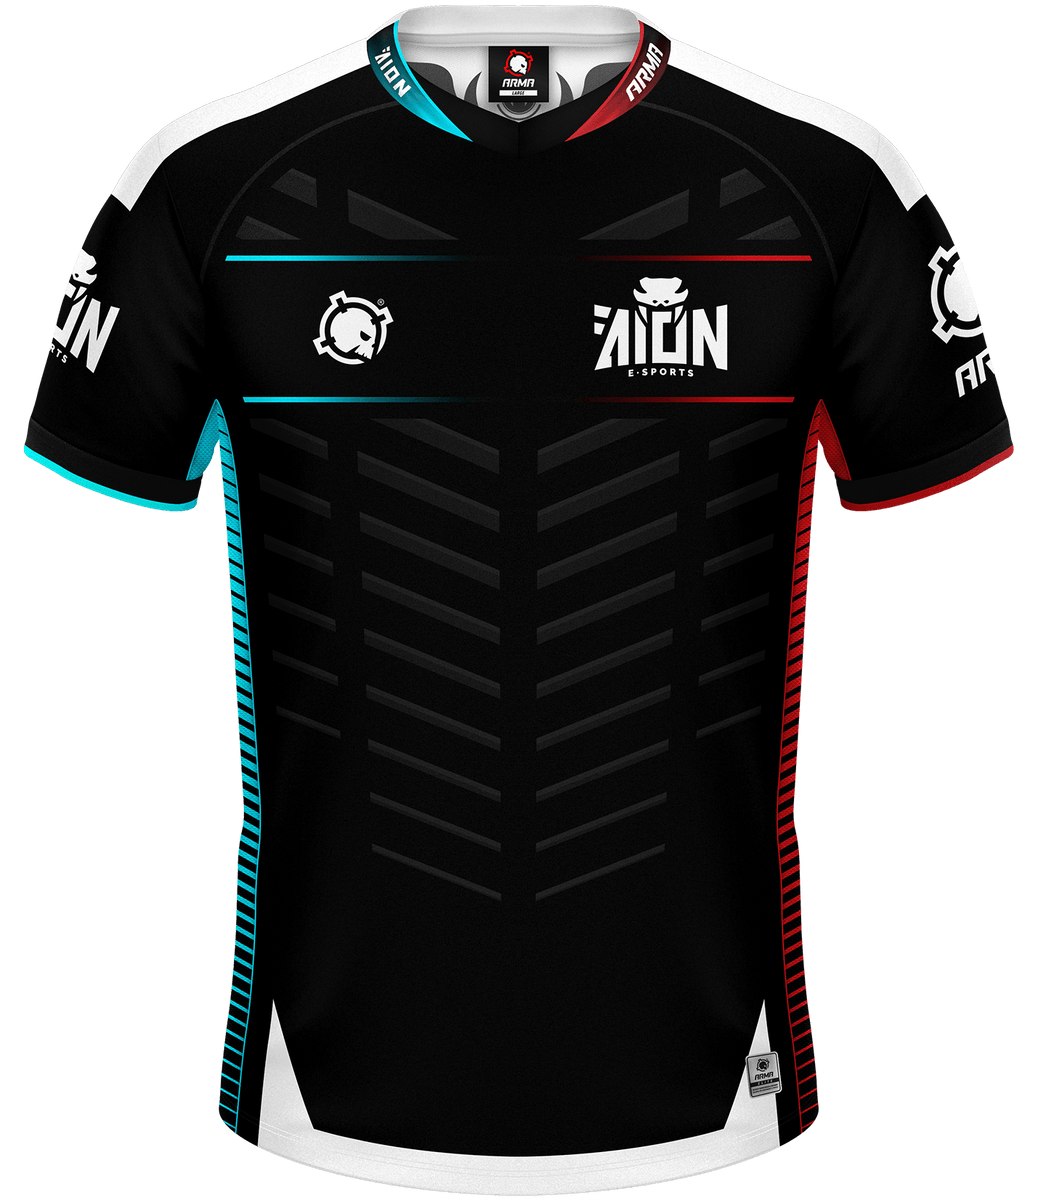 Aion ELITE Jersey - Black - Custom Esports Jersey by ARMA